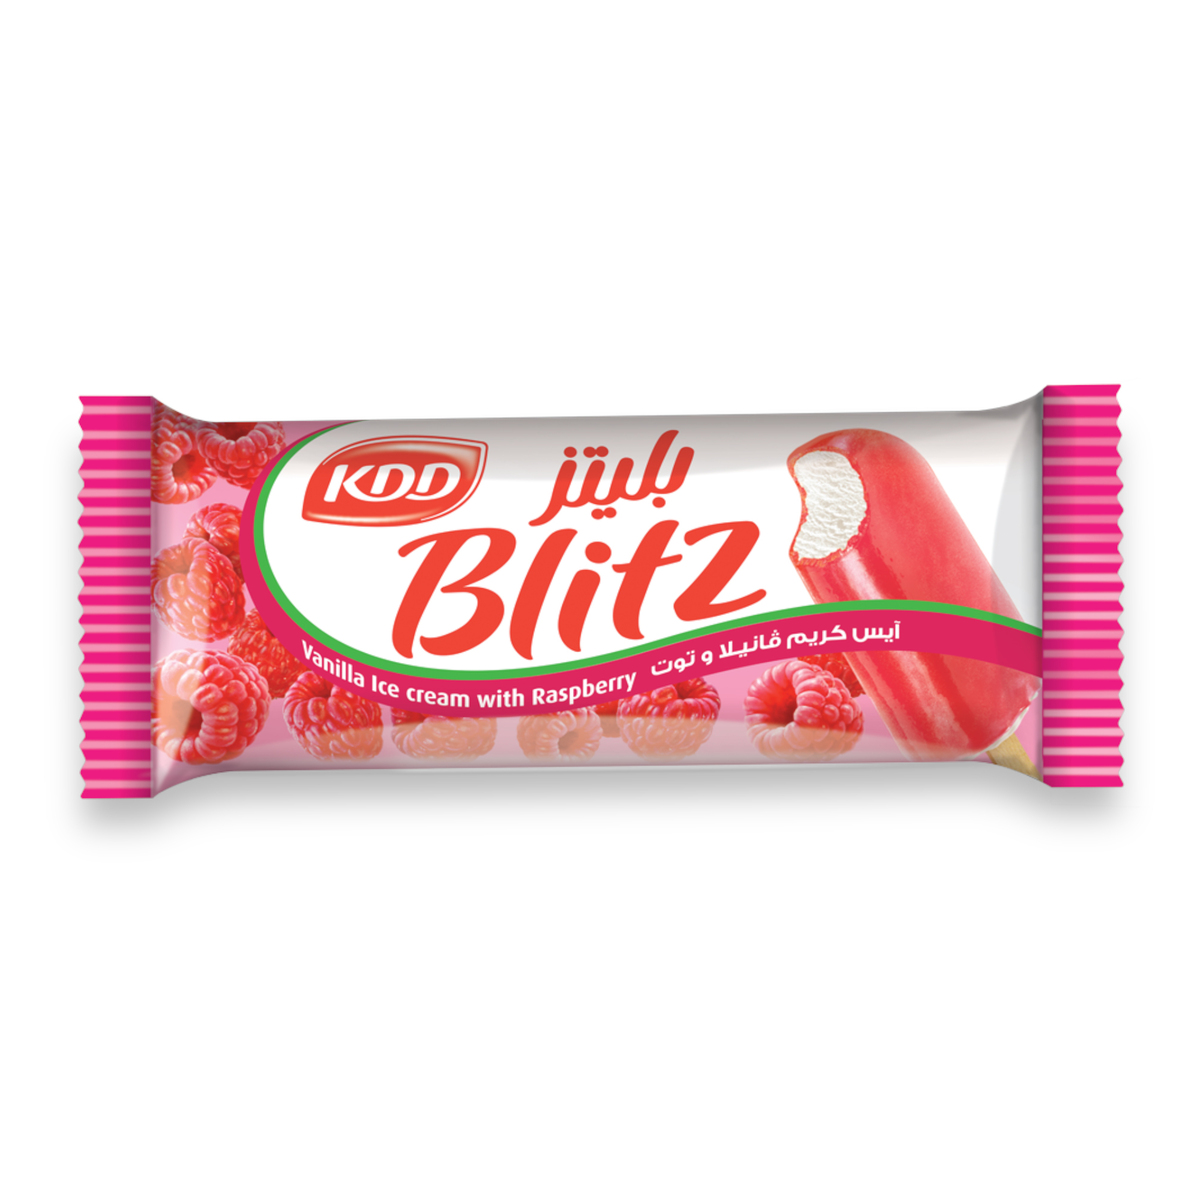 KDD Blitz Vanilla Ice Cream With Raspberry 6 x 62ml